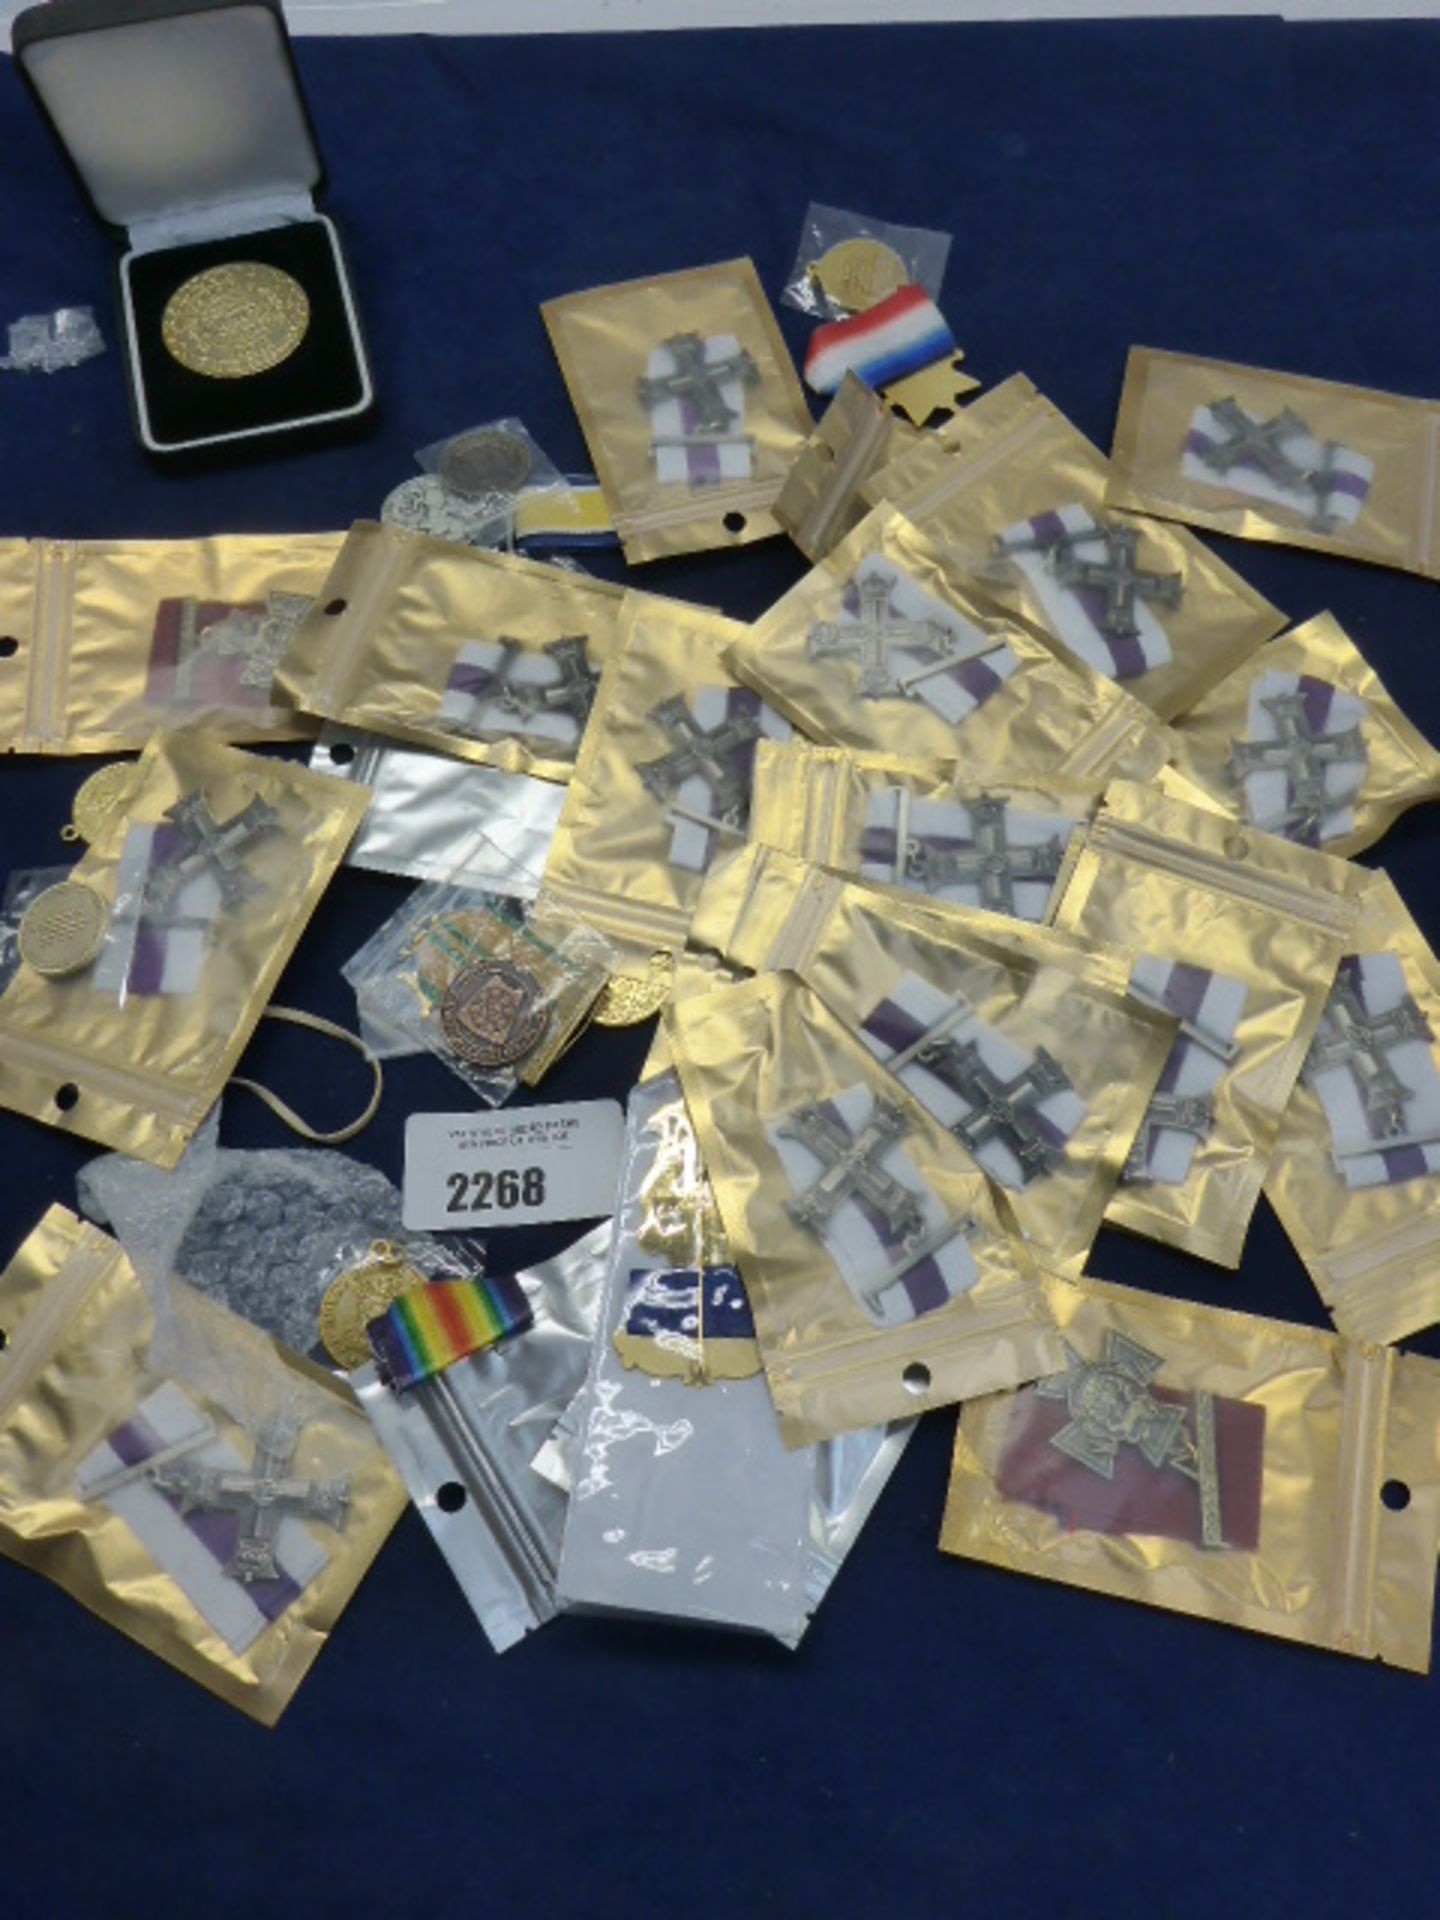 Bag containing various Replica Medals